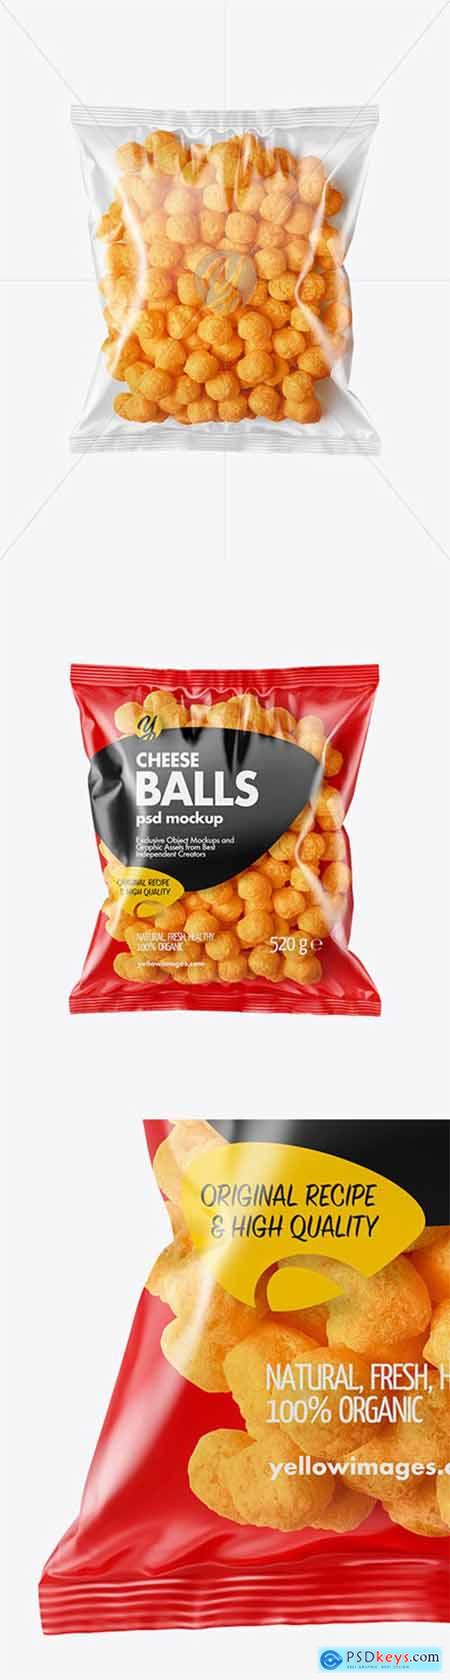 Plastic Bag With Cheese Balls Mockup 79795